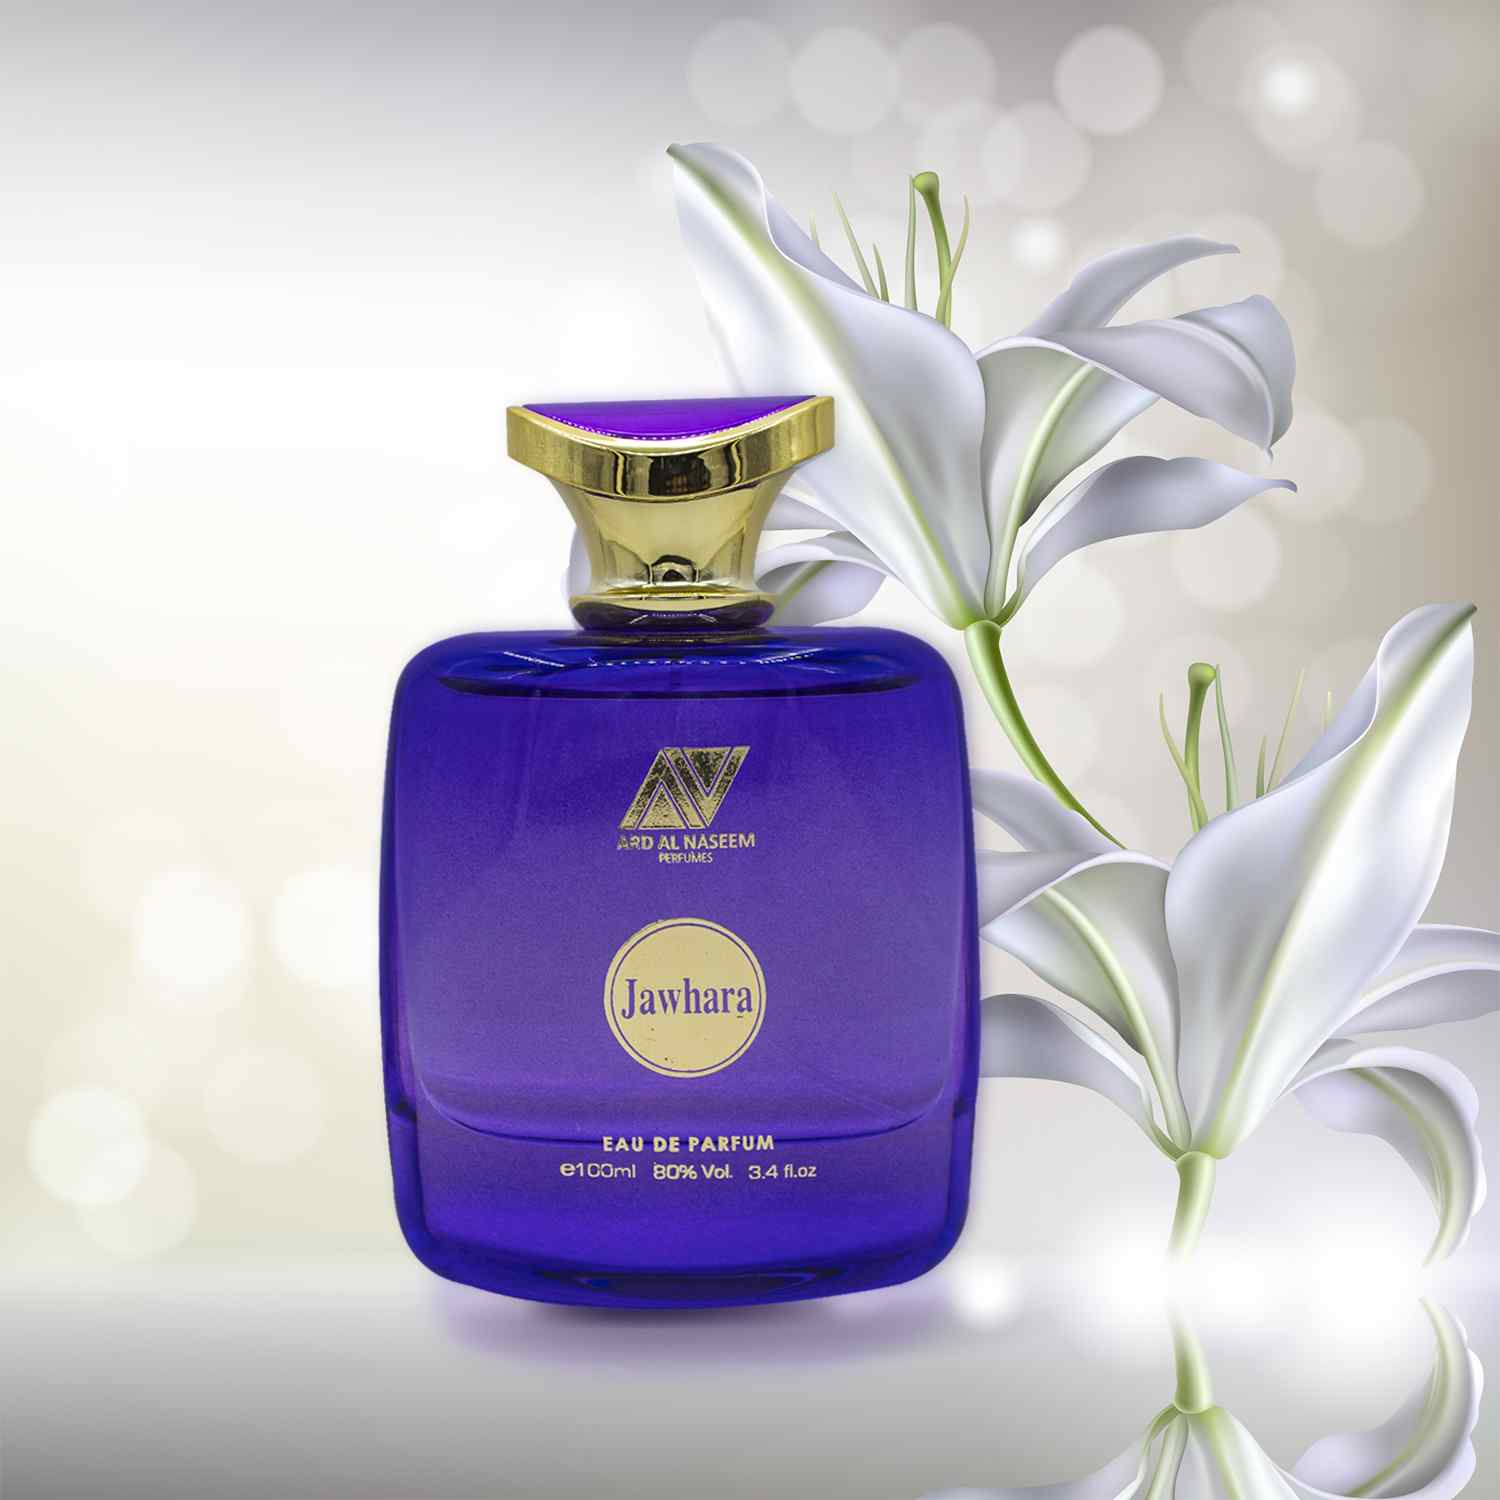 Jawhara Perfume for women by ARD PERFUMES